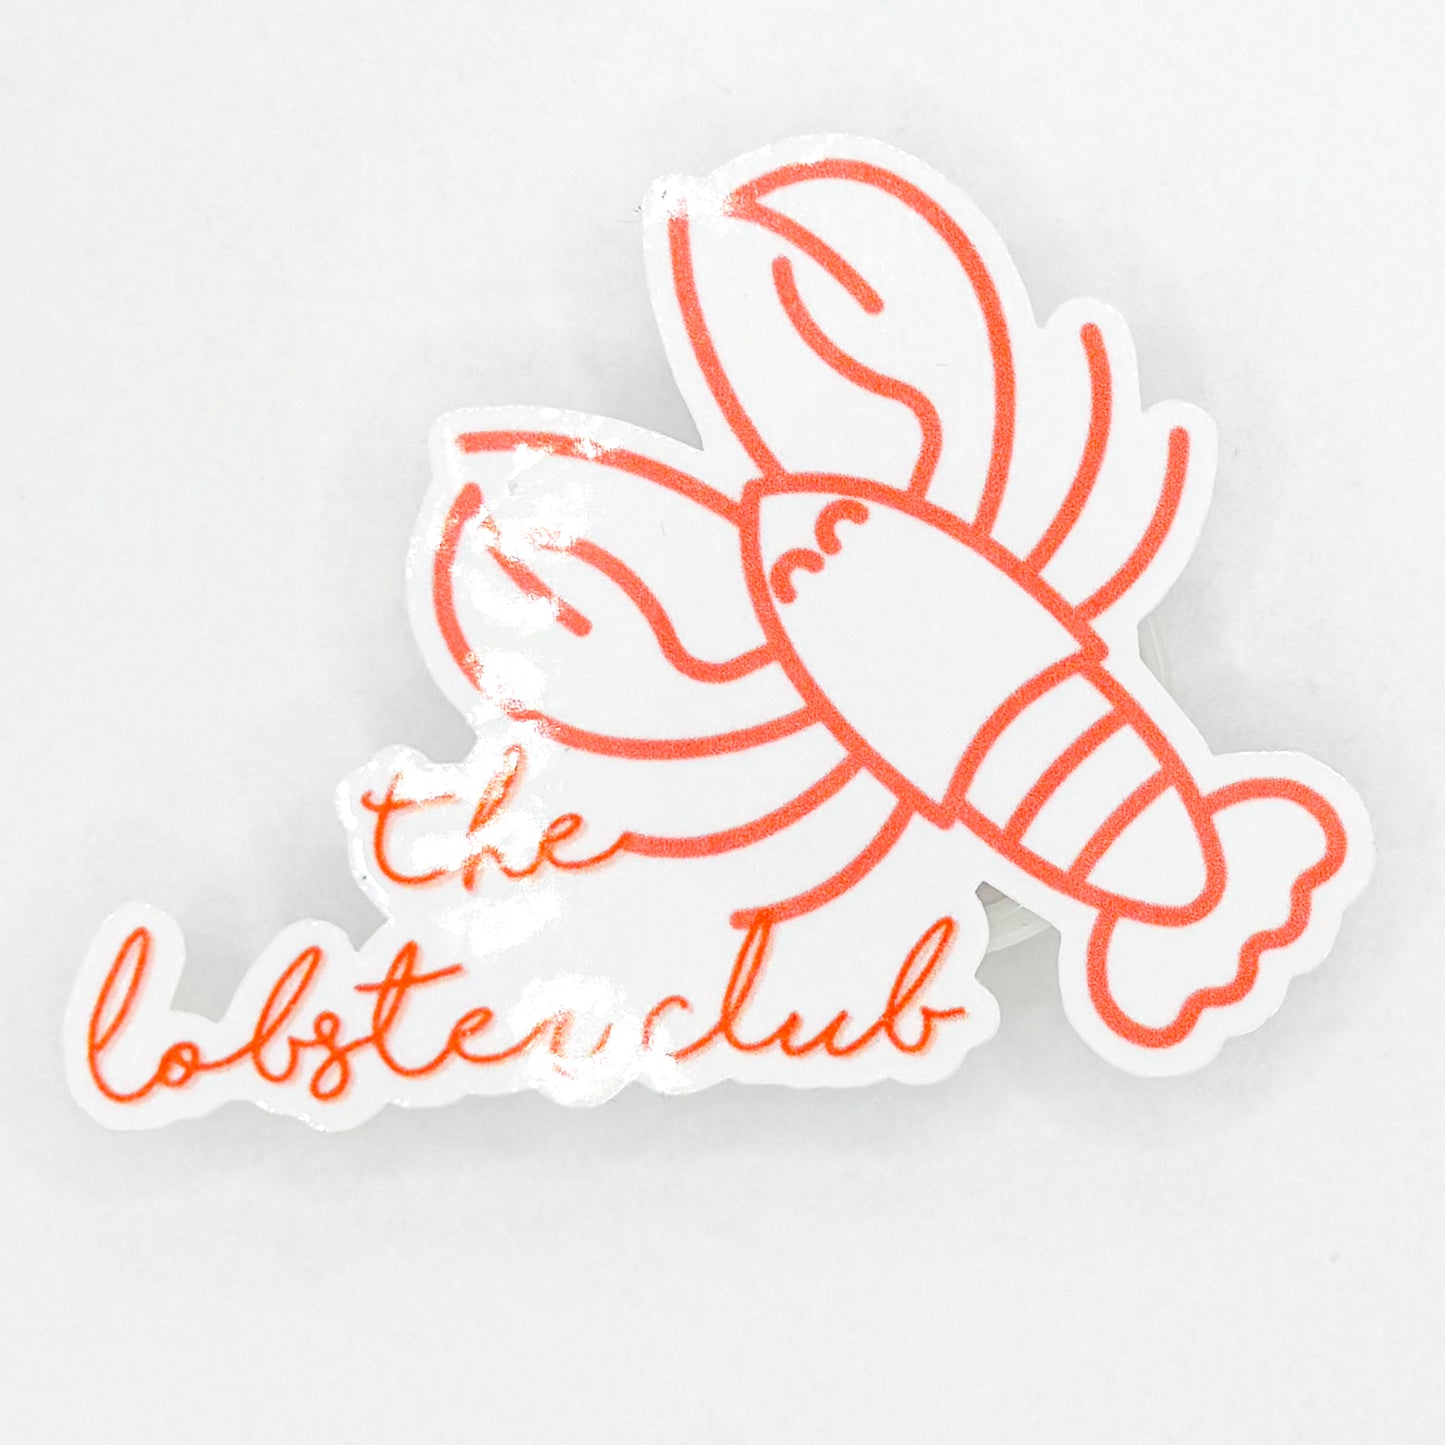 The Lobster Club Sticker